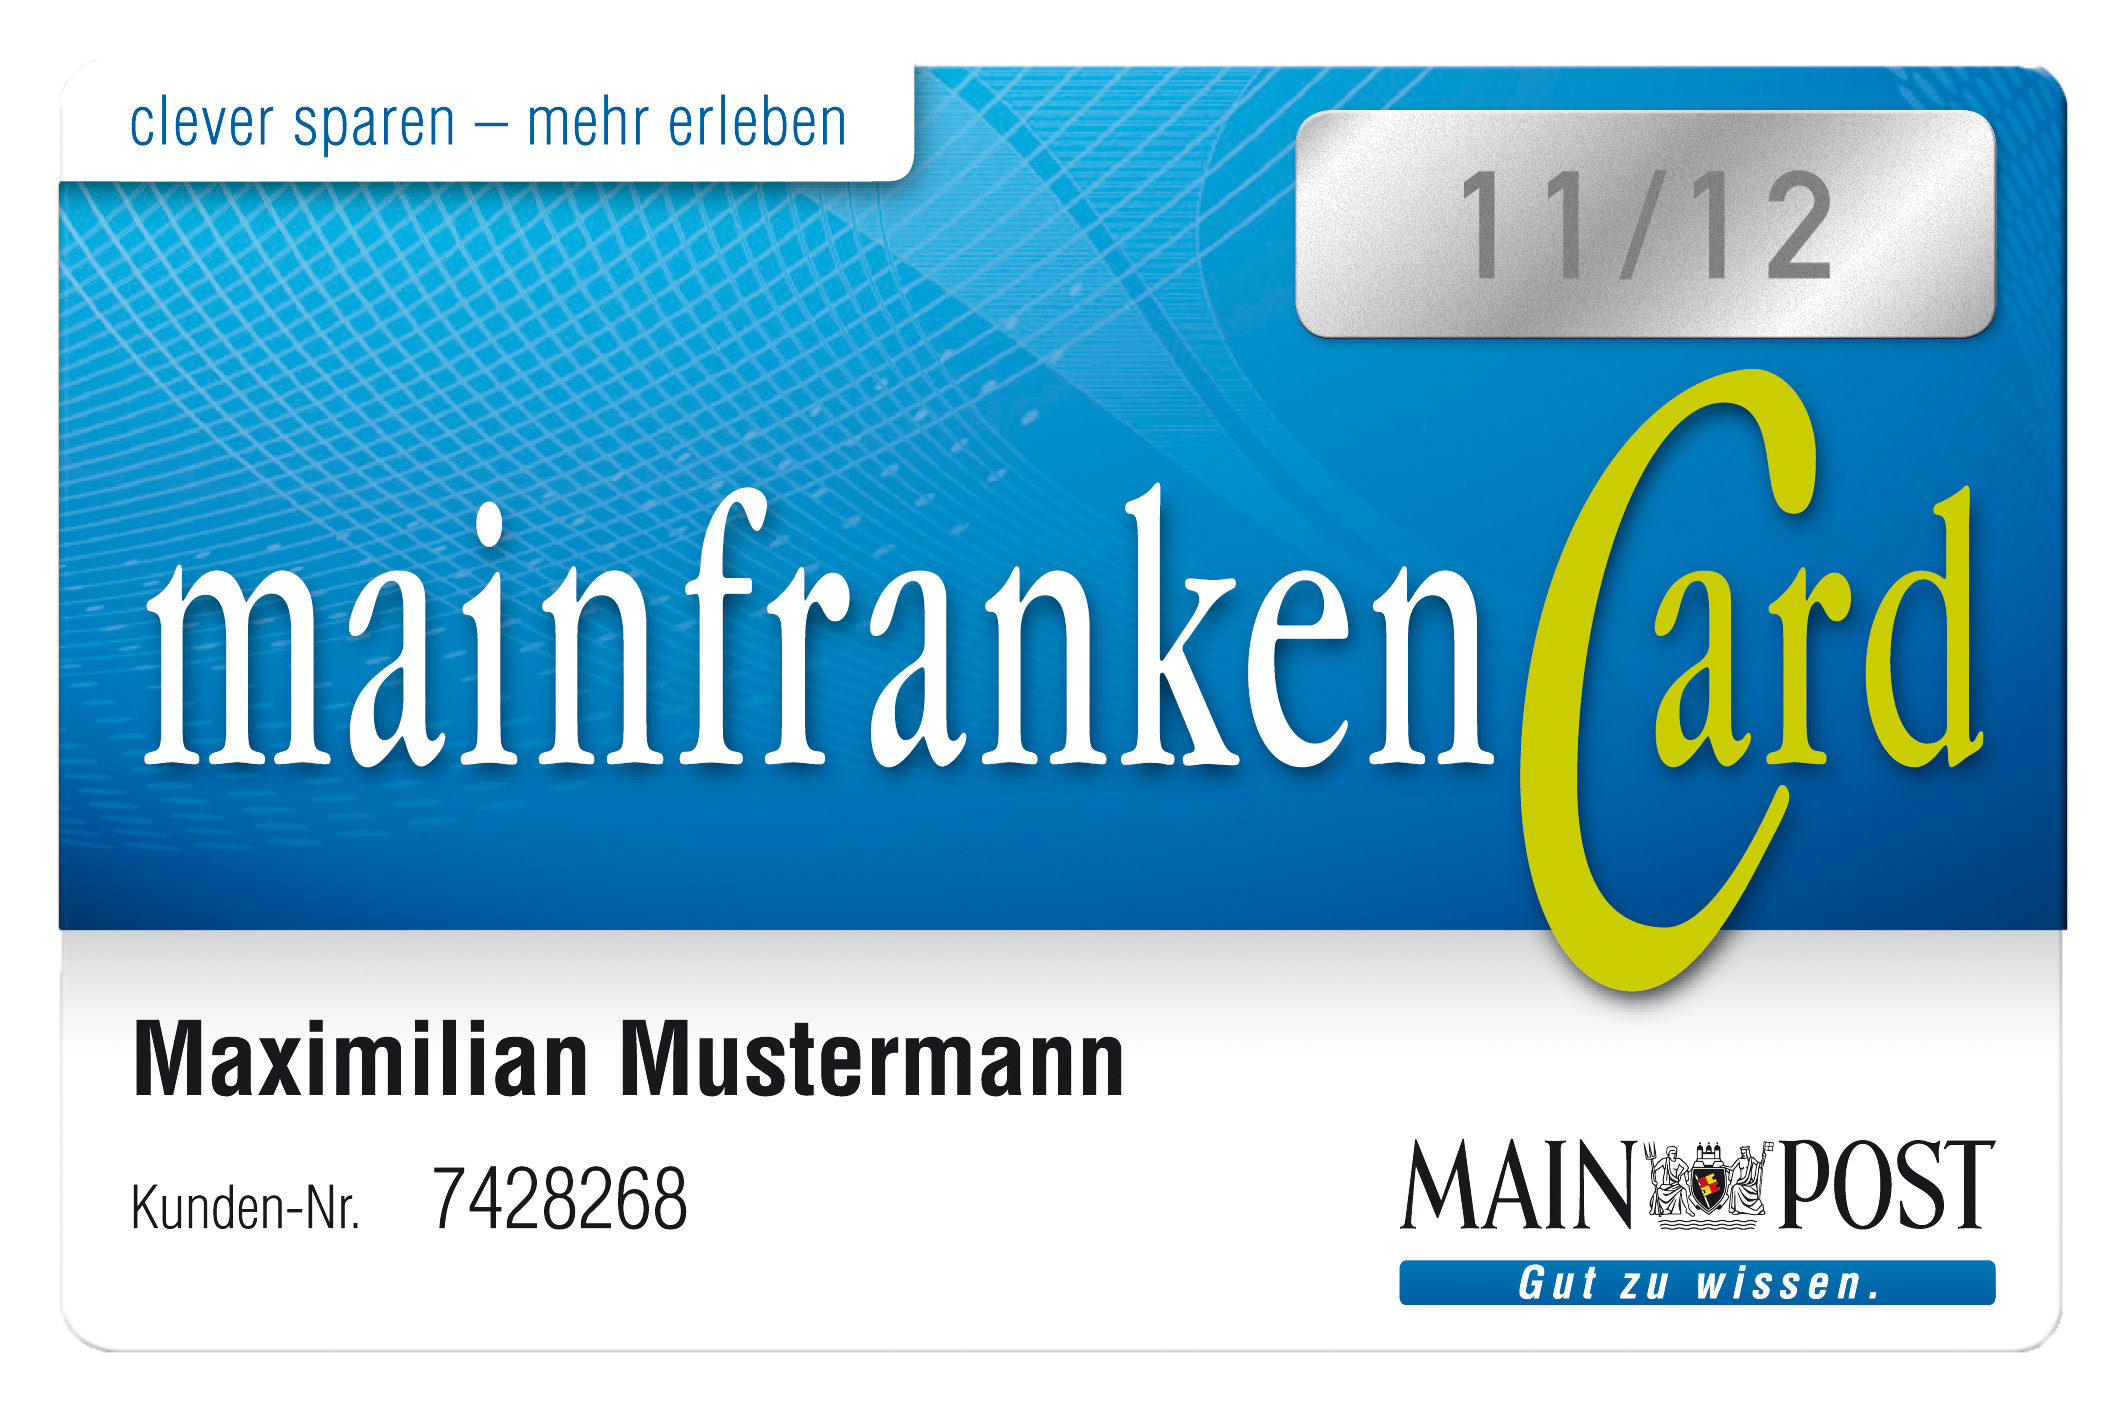  mainfrankencard 